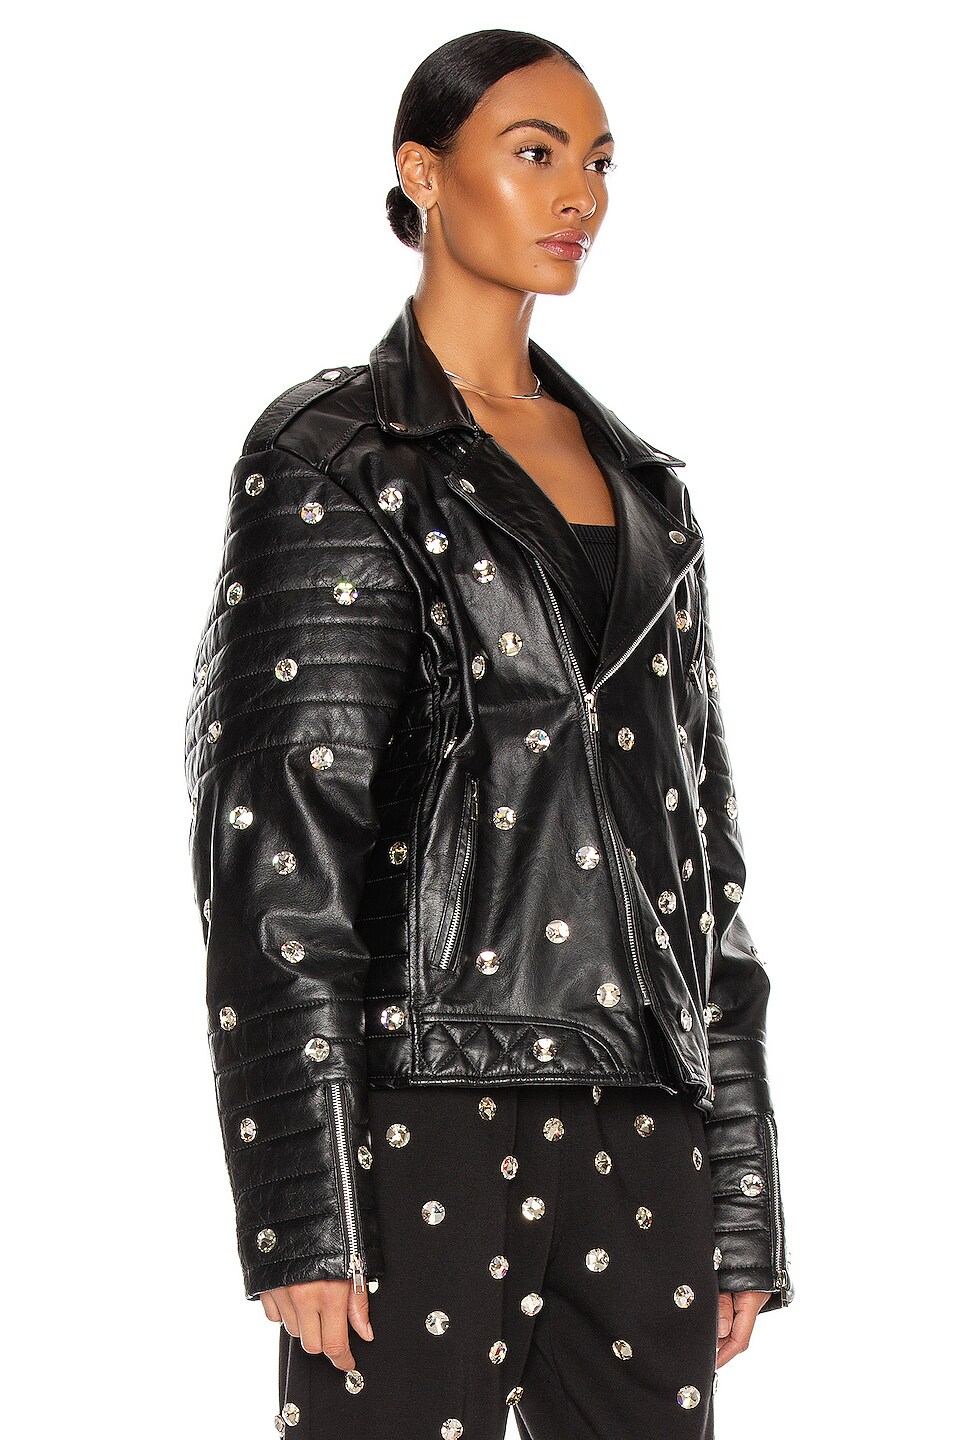 CHRISTIAN COWAN Leather and Swarovski Crystal Jacket in Black 1 | FWRD